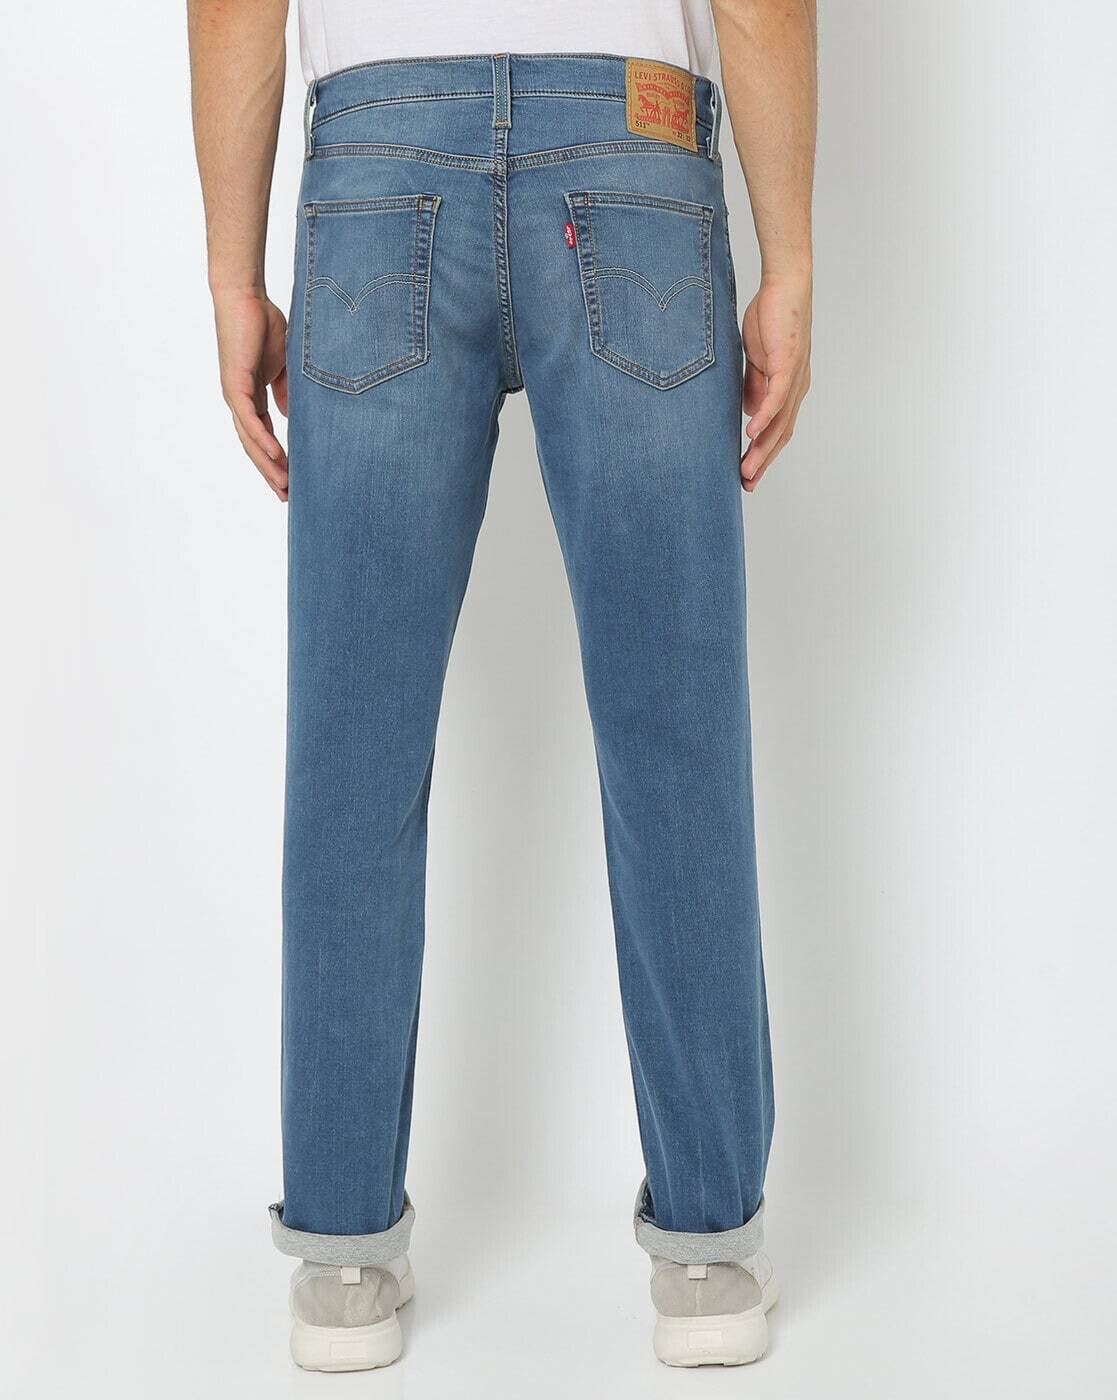 MB 511 Mid-Wash Slim Fit Jeans-18298-1005